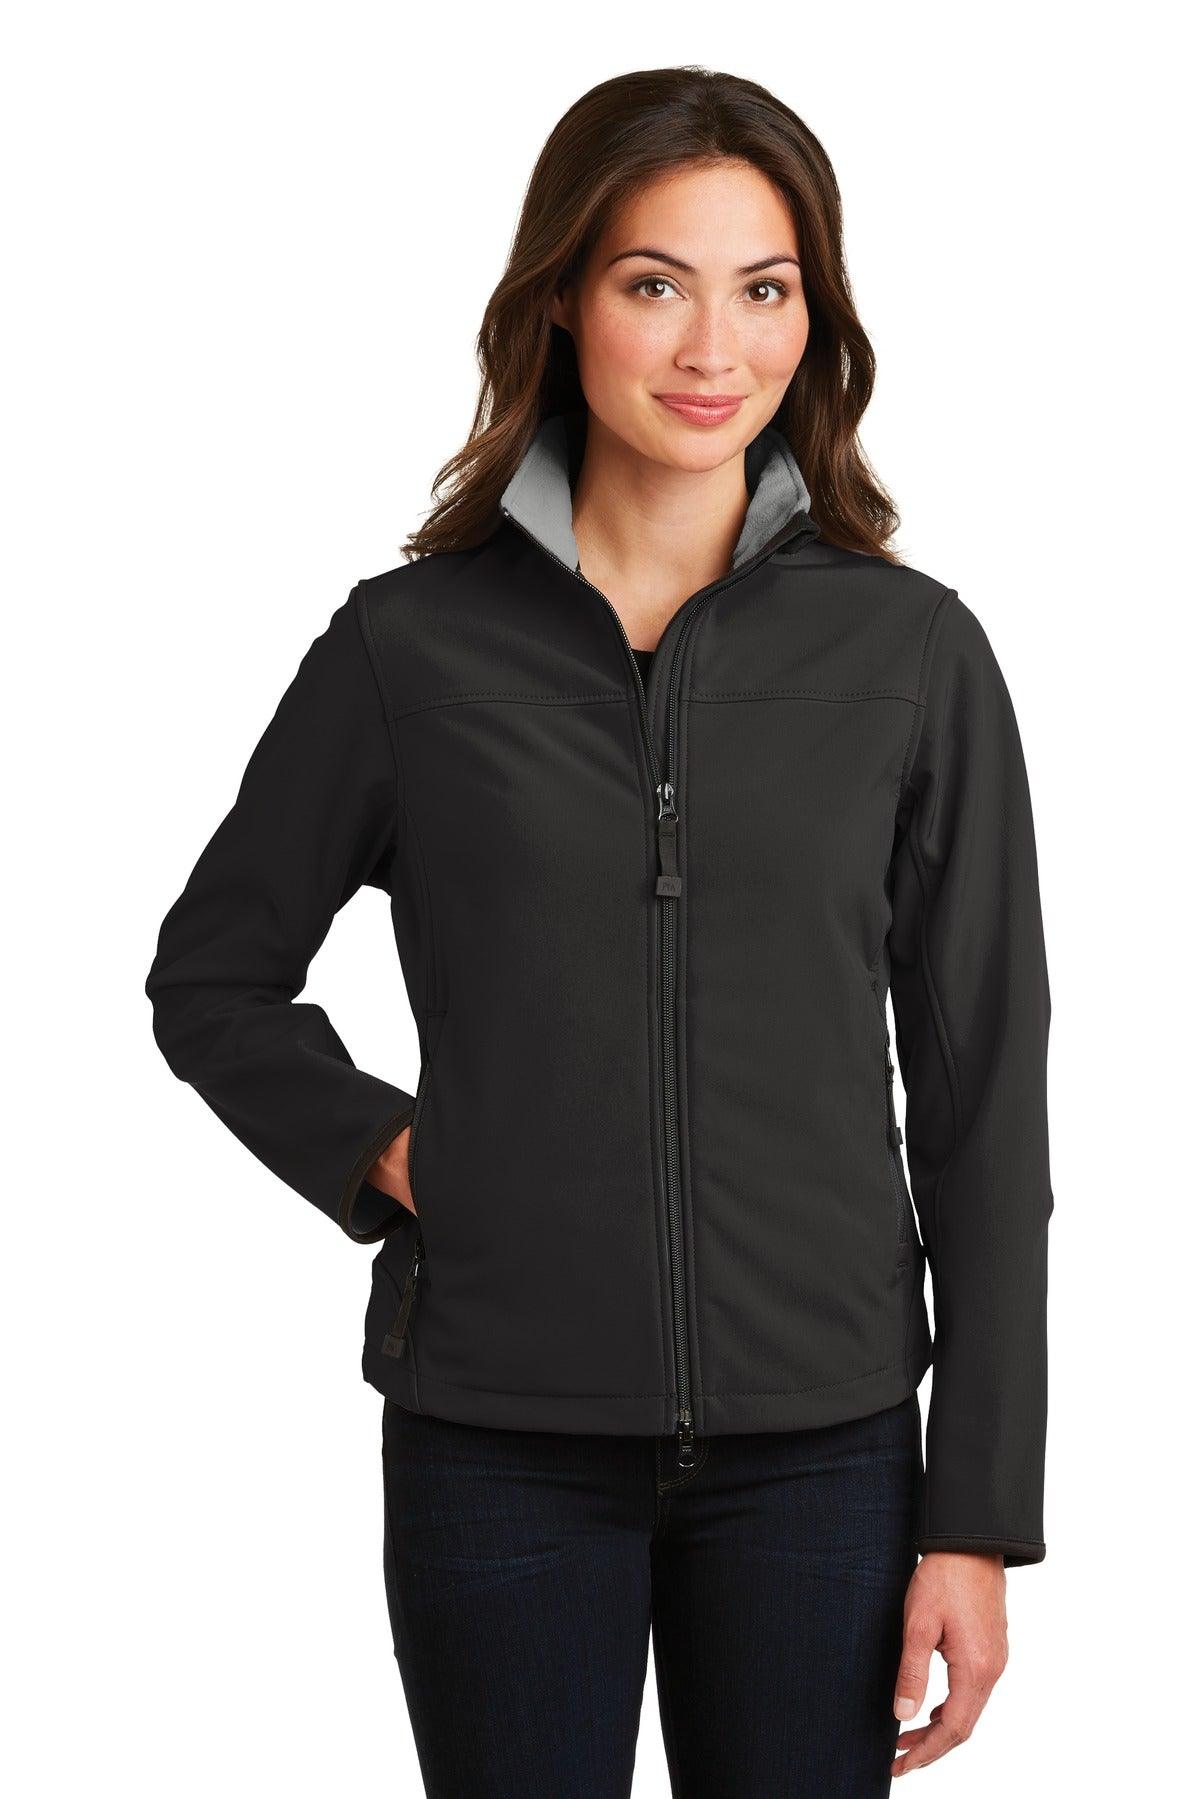 Port Authority Ladies Glacier Soft Shell Jacket. L790 - Dresses Max